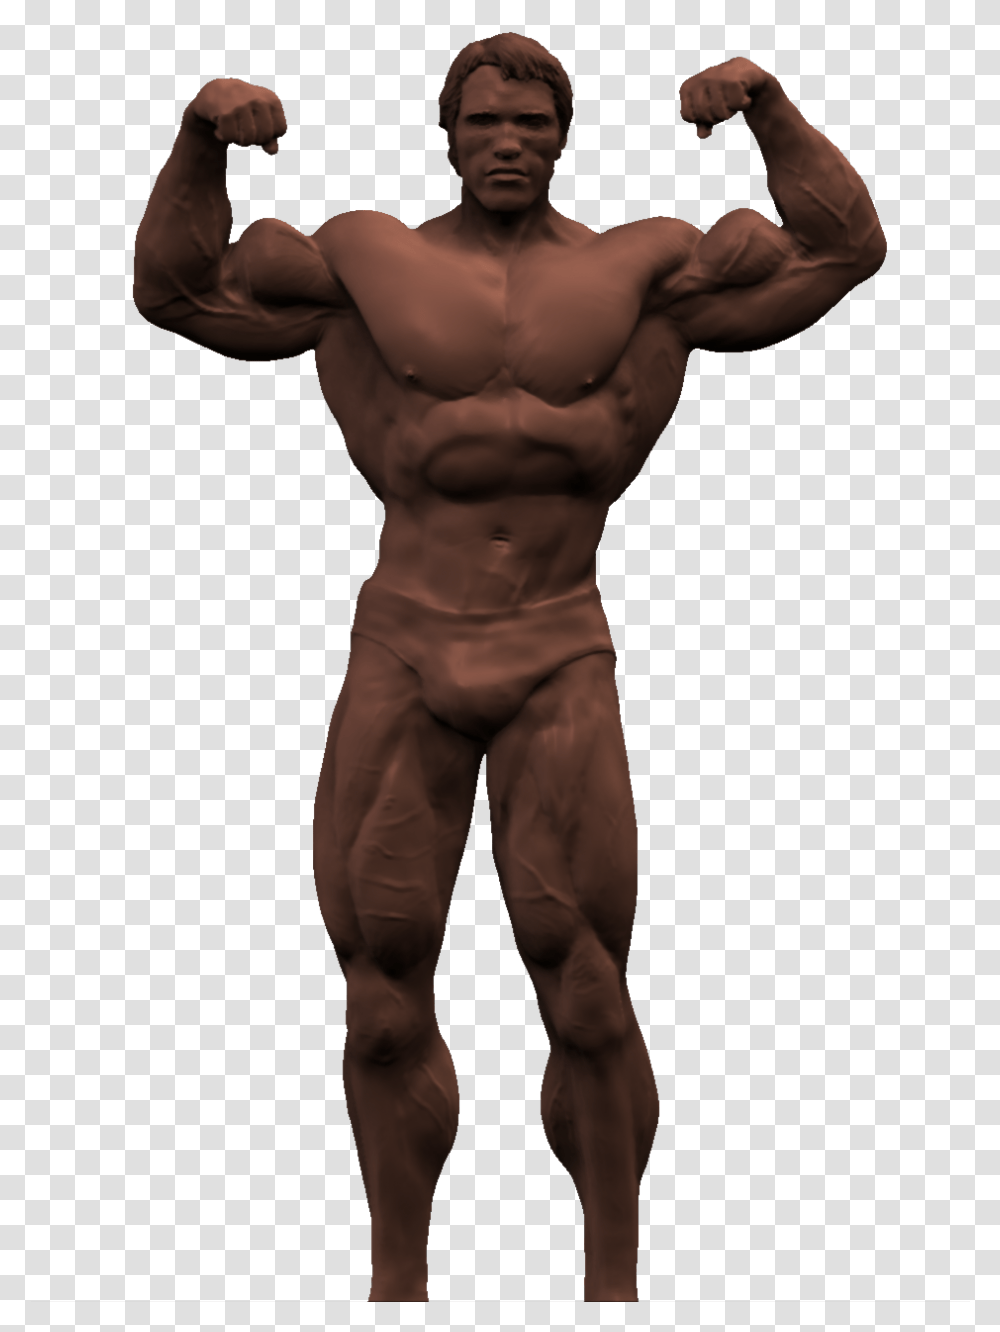 Arnold Schwarzenegger Bodybuilding Pic Arnold Schwarzenegger Background, Arm, Person, Human, Torso Transparent Png